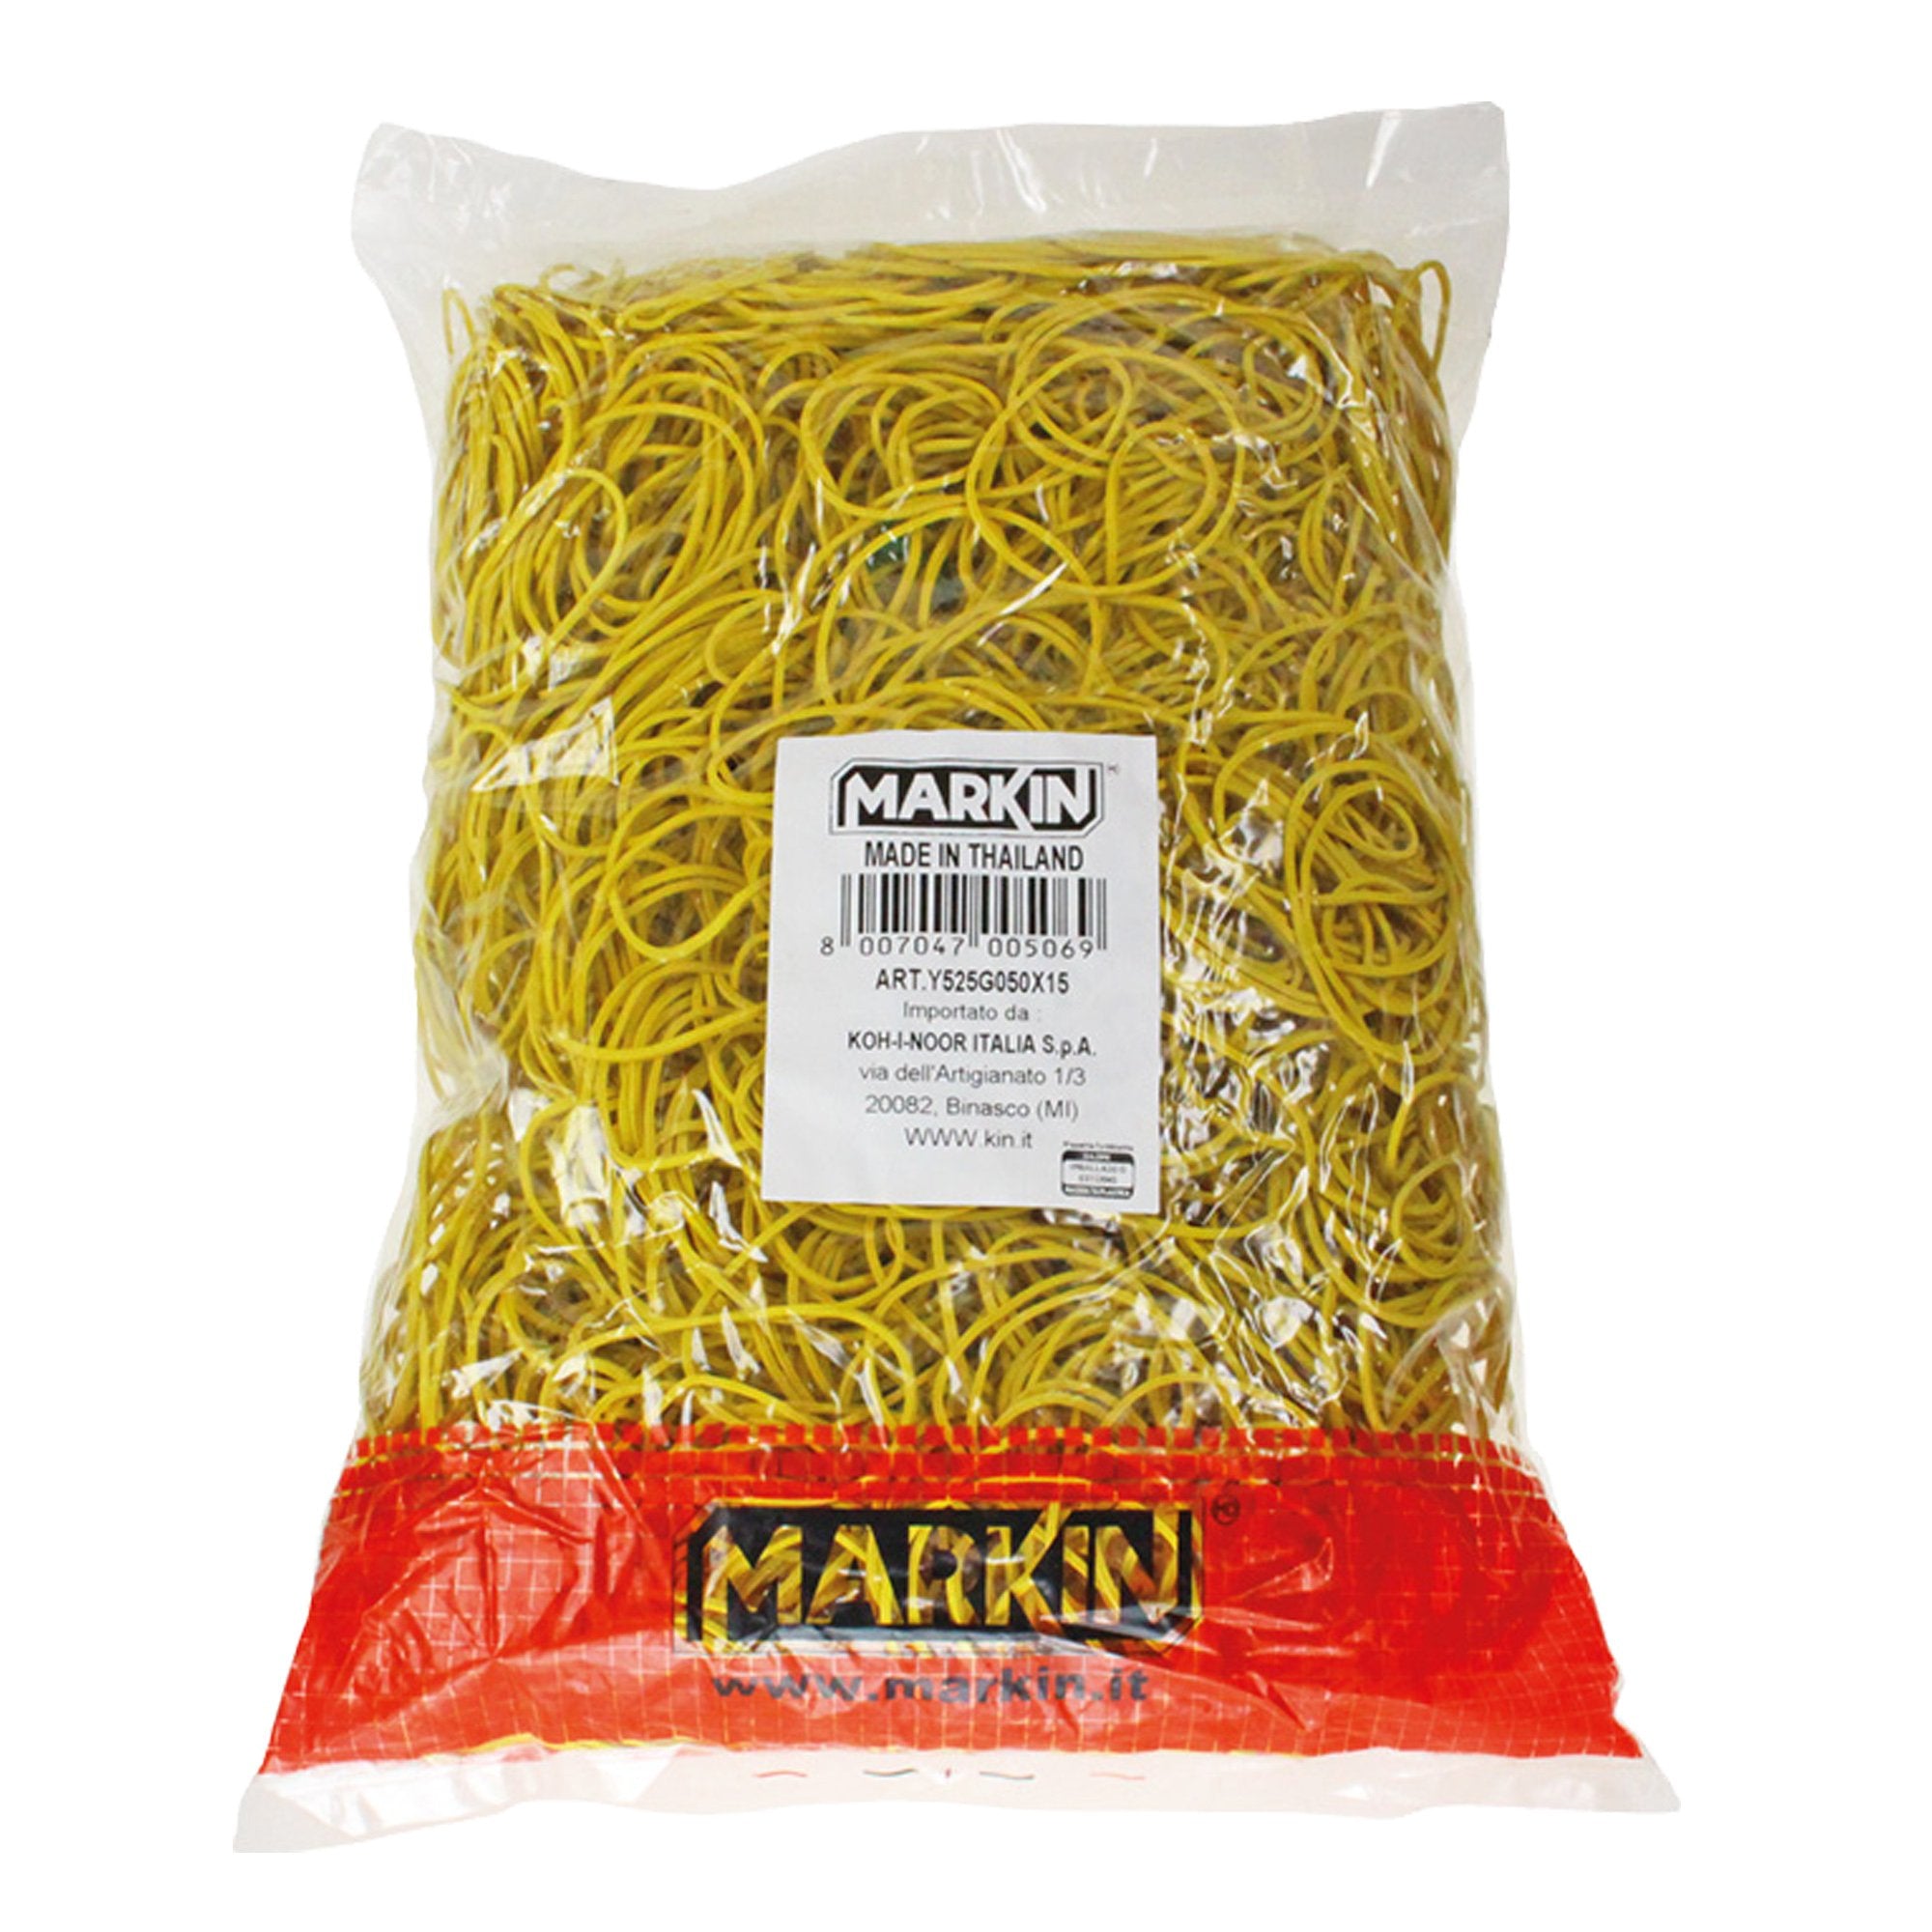 markin-elastico-gomma-giallo-d90-sacco-1kg